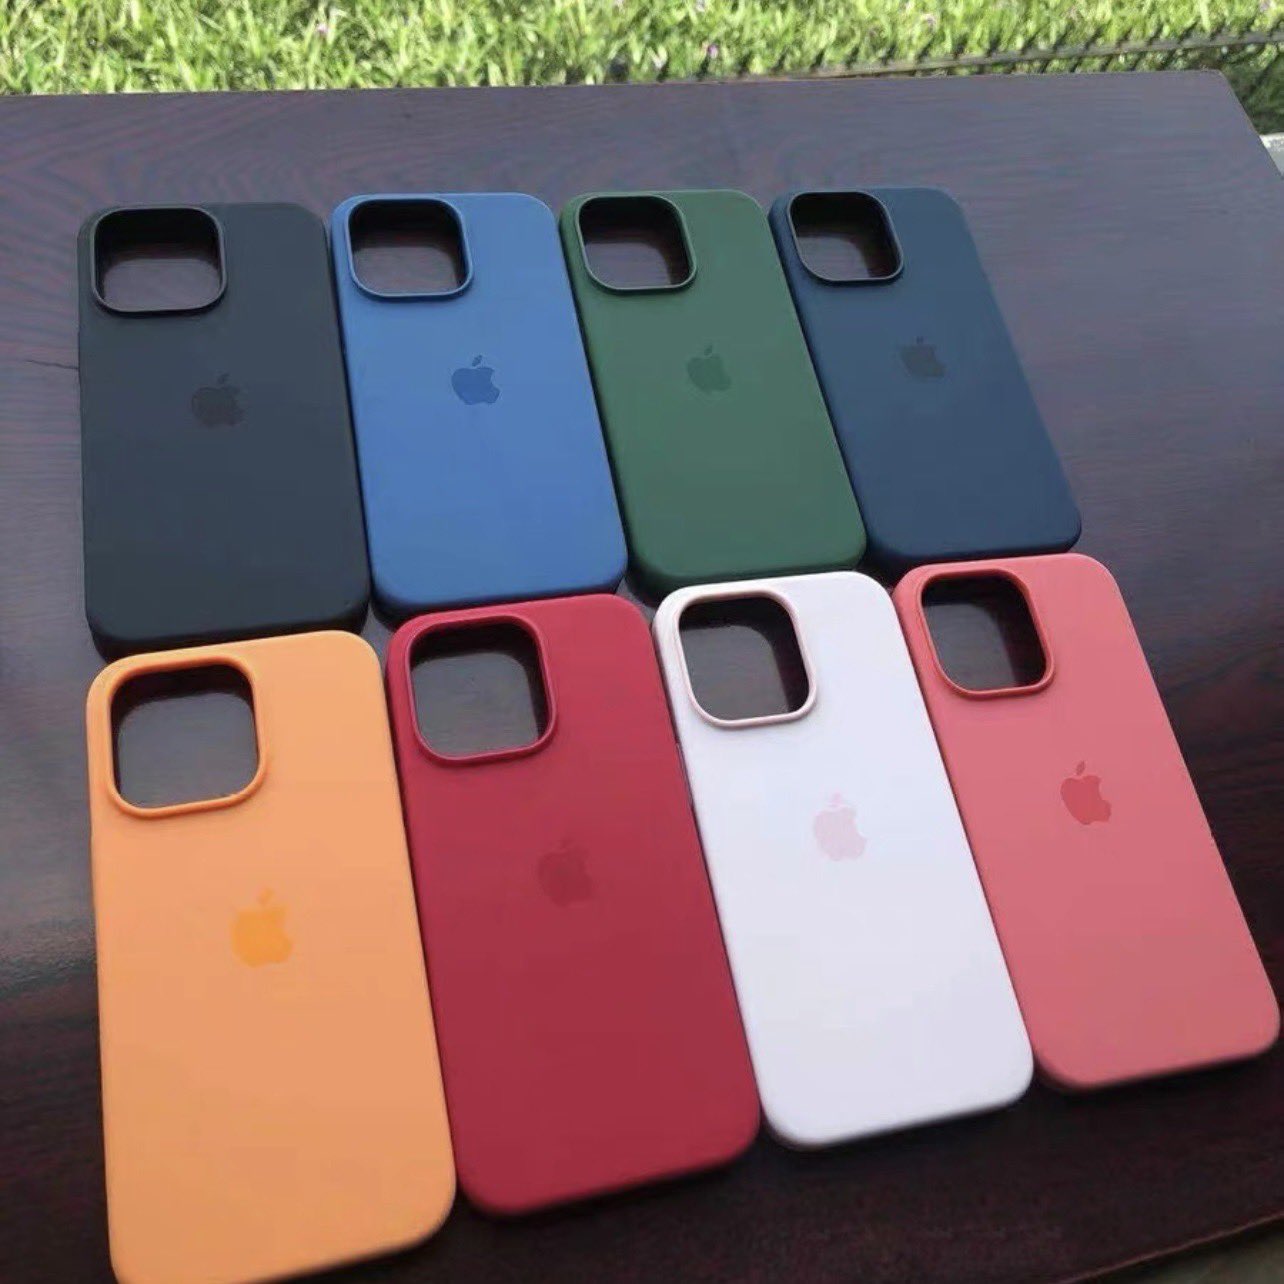 iPhone 13 leather case leak